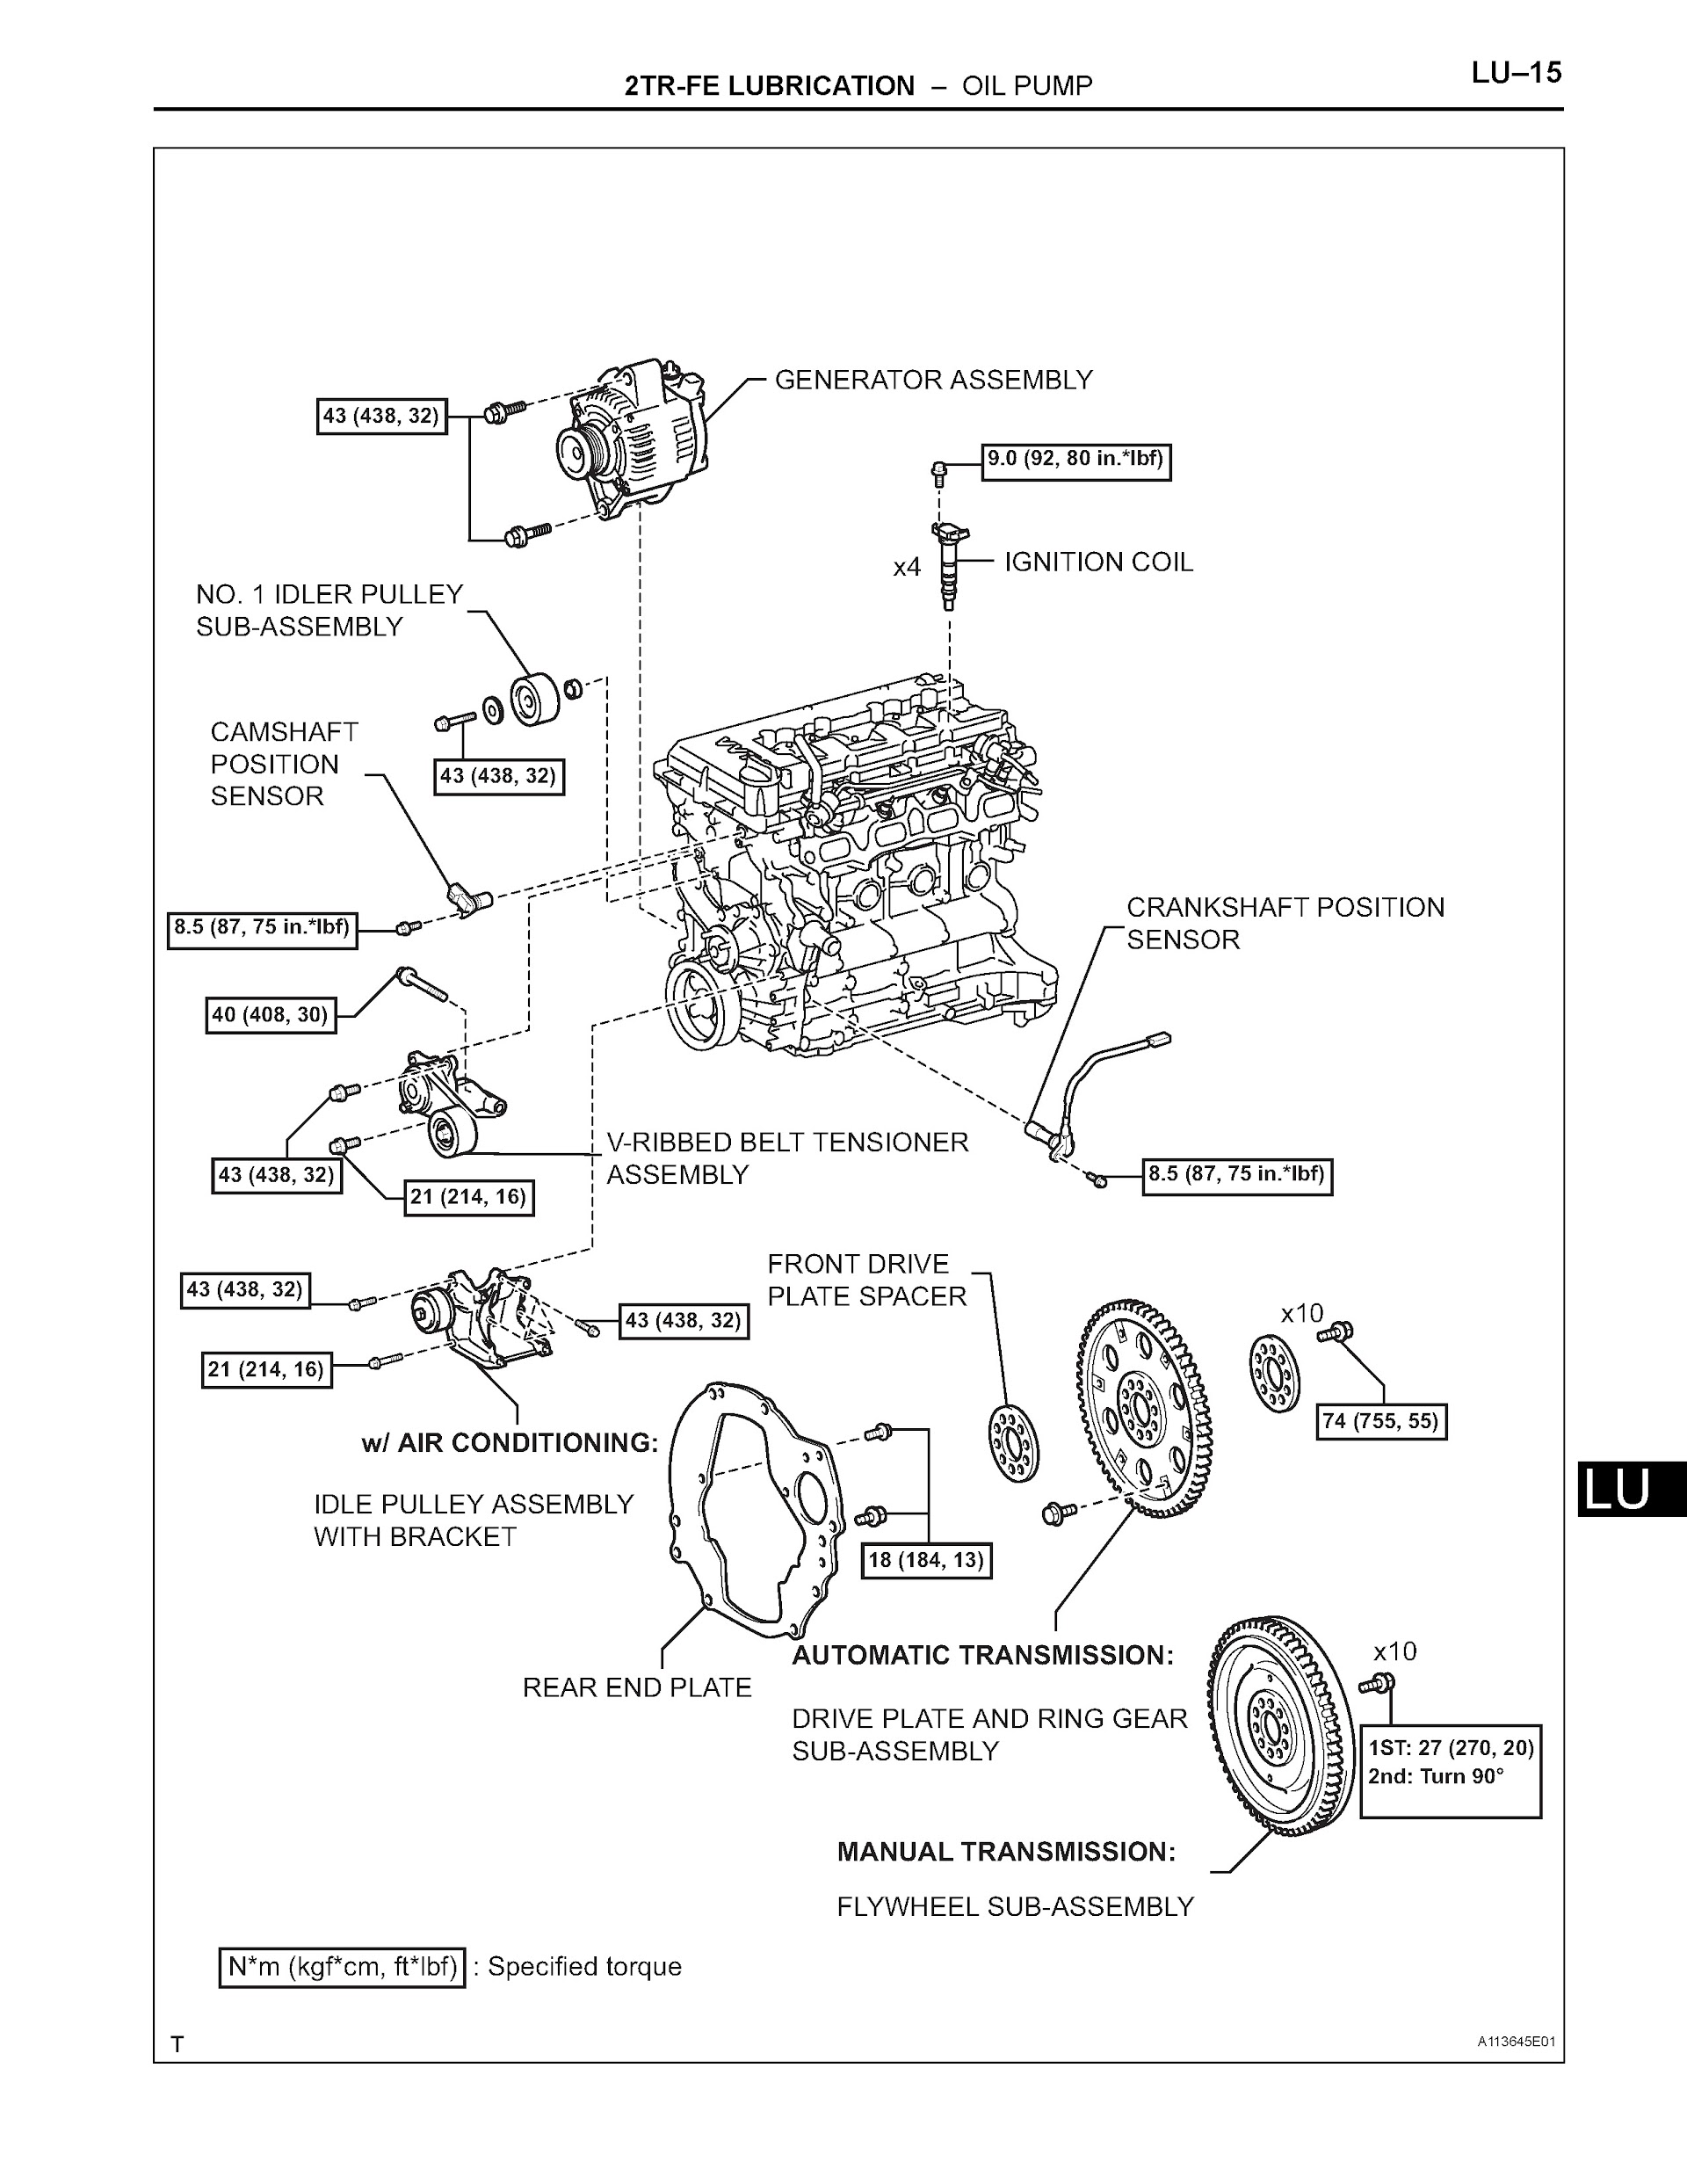 2005-2006 Toyota Tacoma Repair Manual 2TR-FE Lubrication Oil Pump